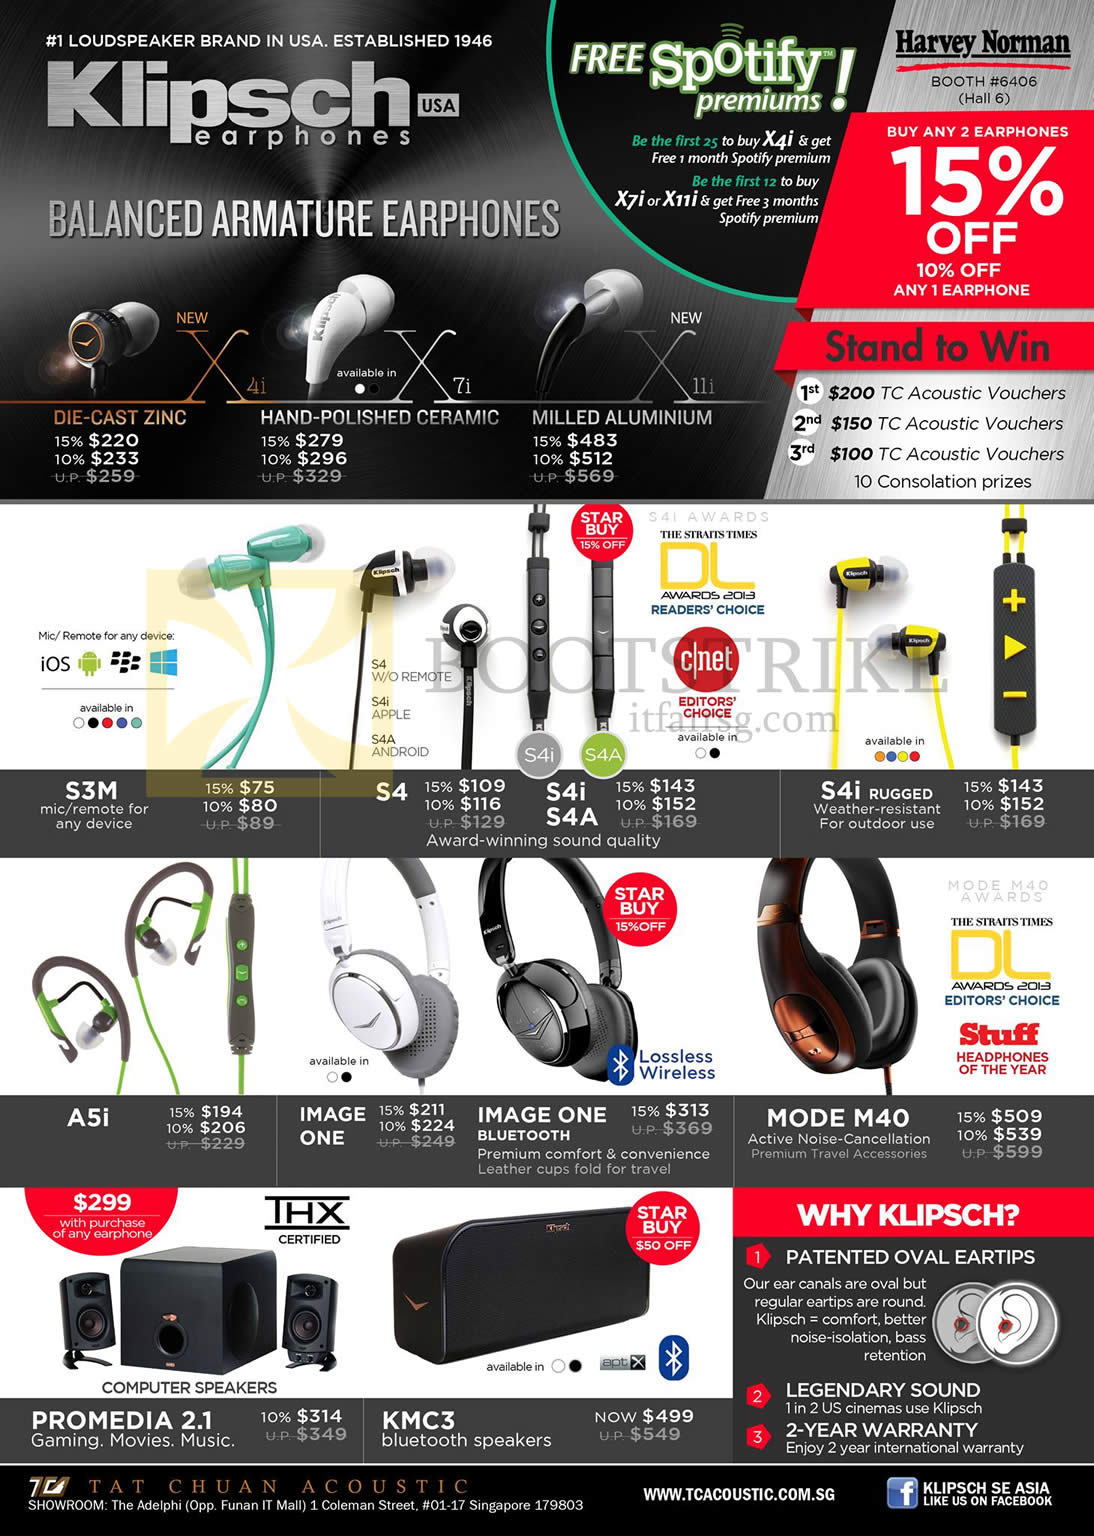 COMEX 2013 price list image brochure of Harvey Norman Klipsch Earphones X4i, X7i, 11i, S3M, S4, S4i, S4a, A5i, Image One, Mode M40 Headphones, Promedia 2.1 Speakers, KMC3